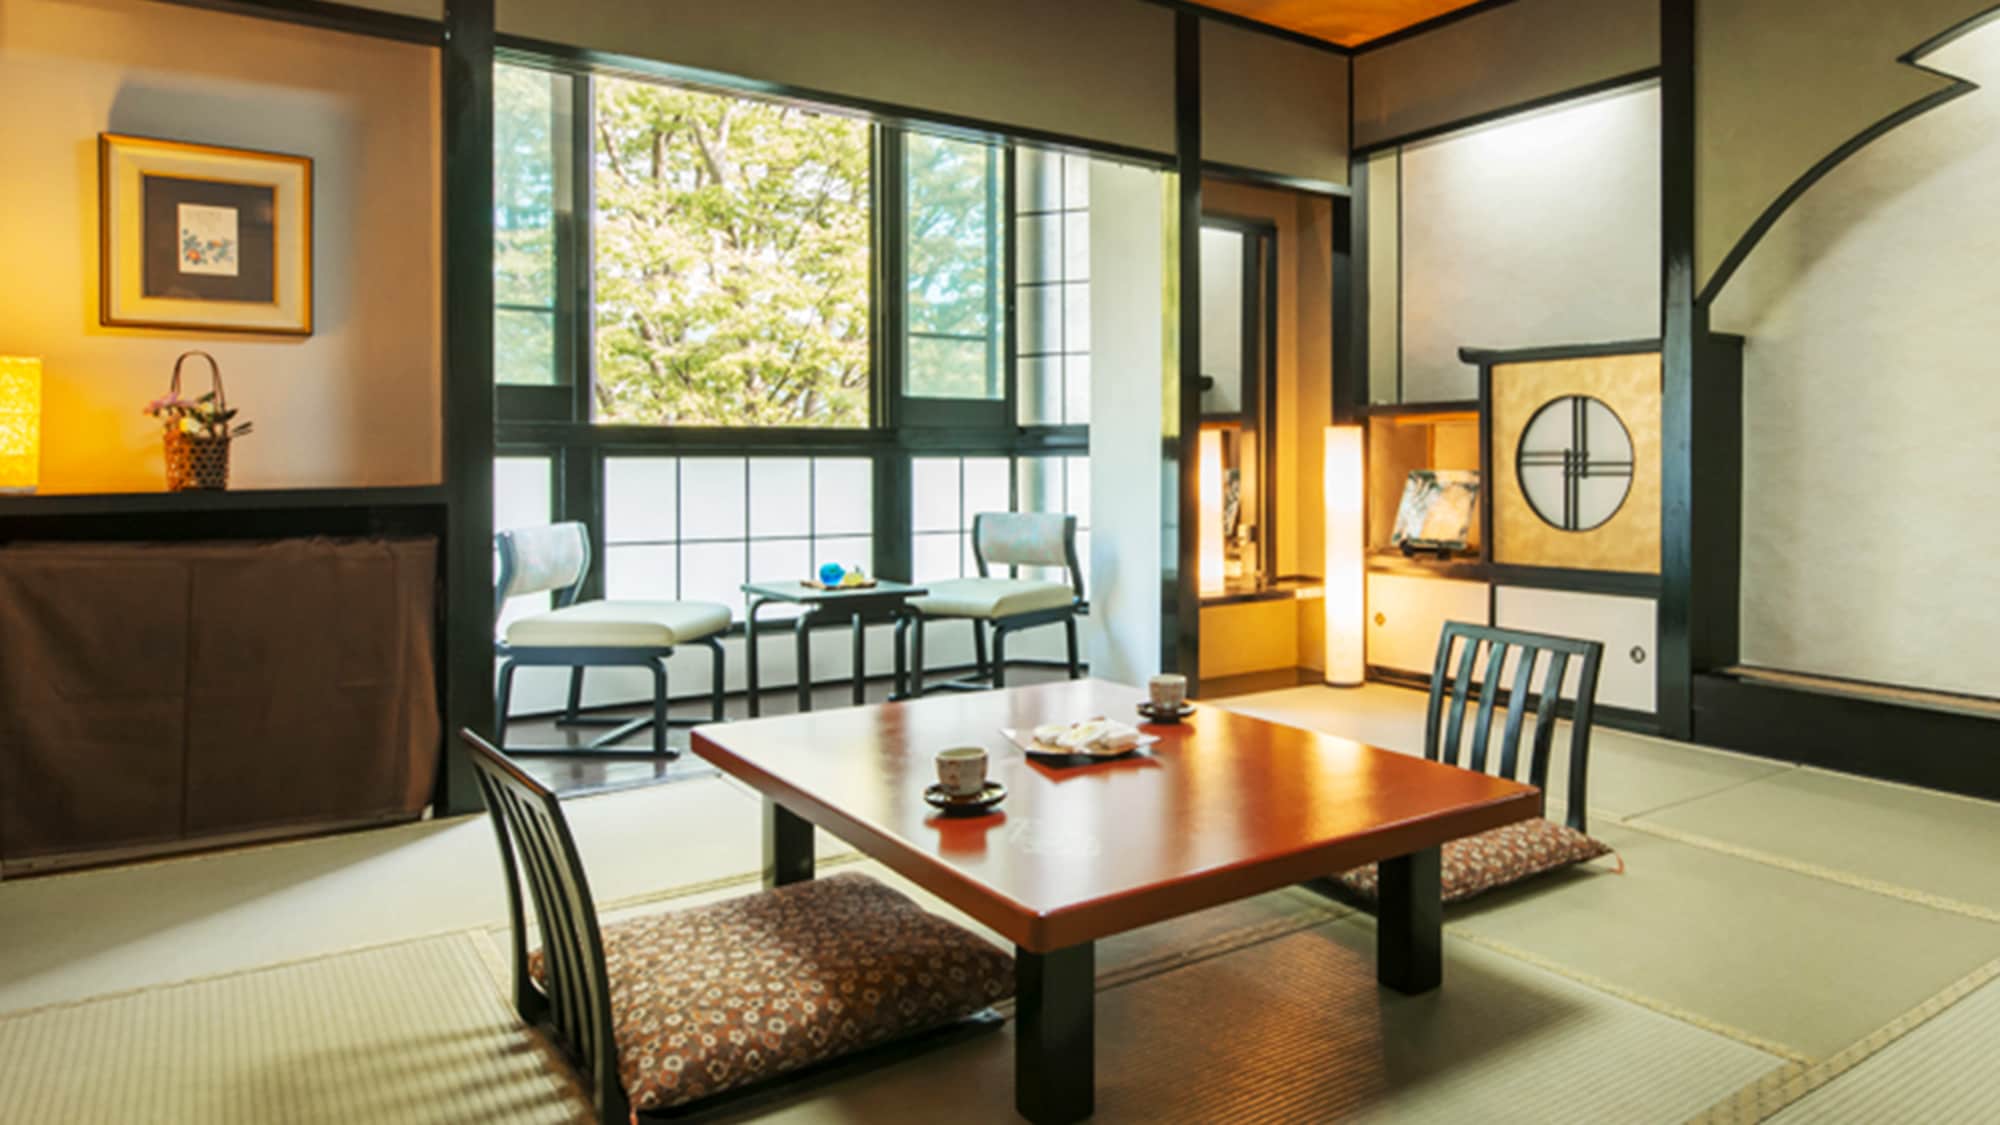 Kirakukan Japanese-style room example